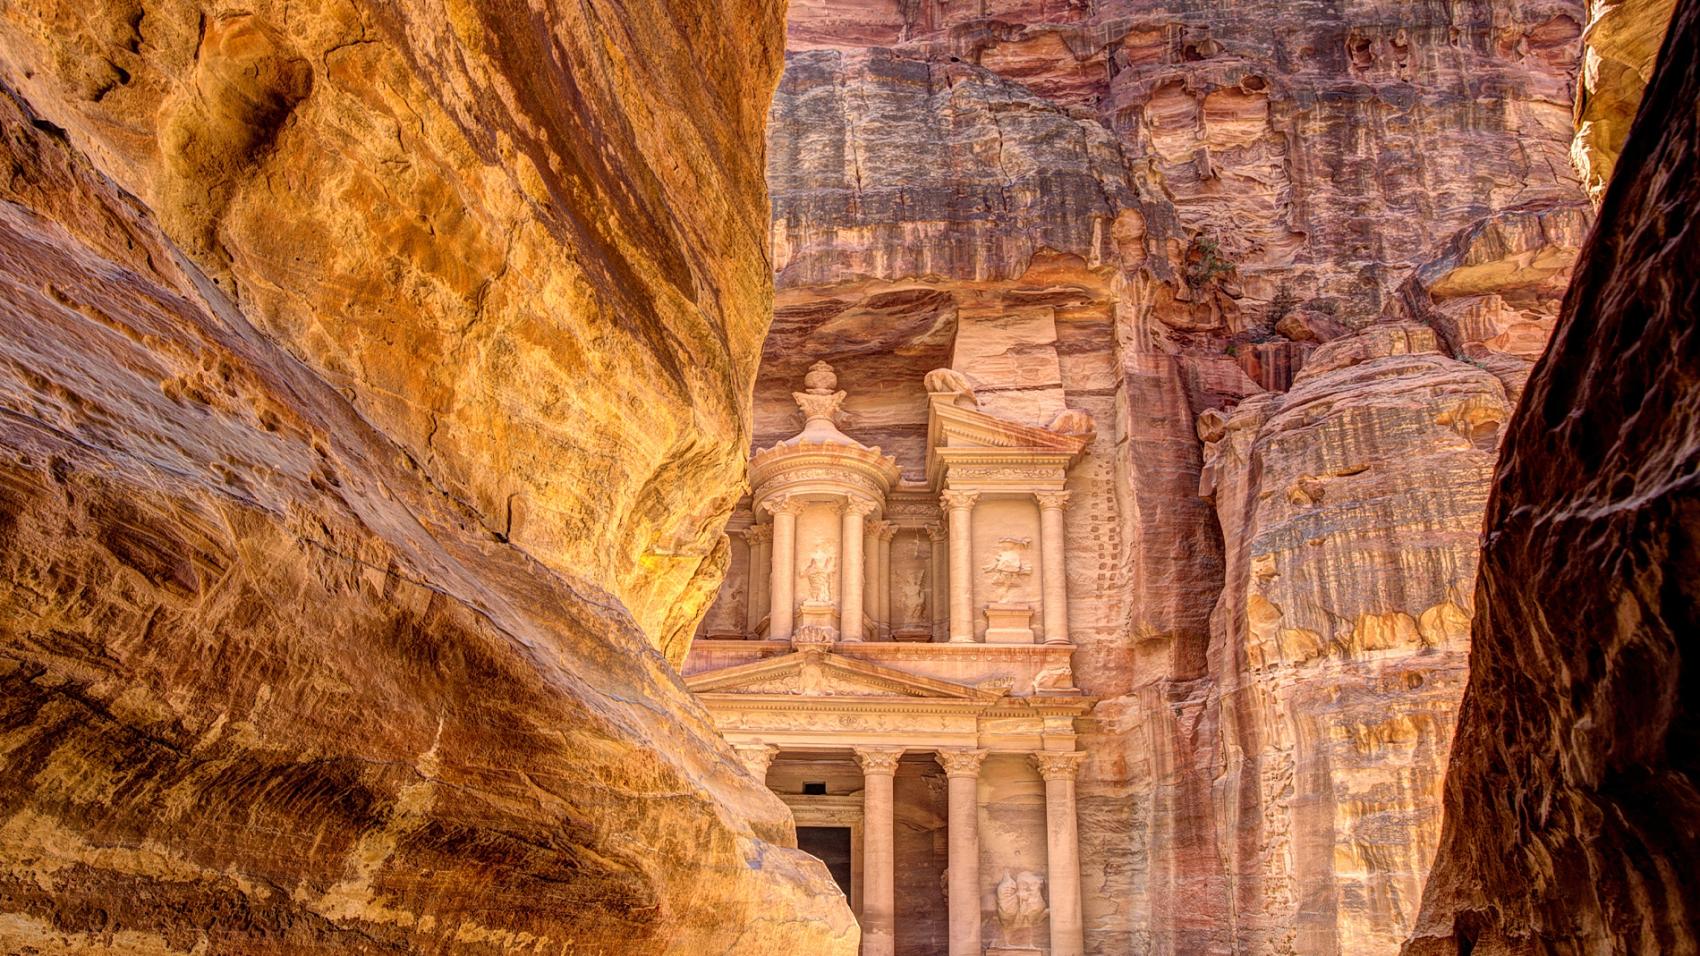 UN Tourism Launches the Tourism Investment Guidelines for Jordan